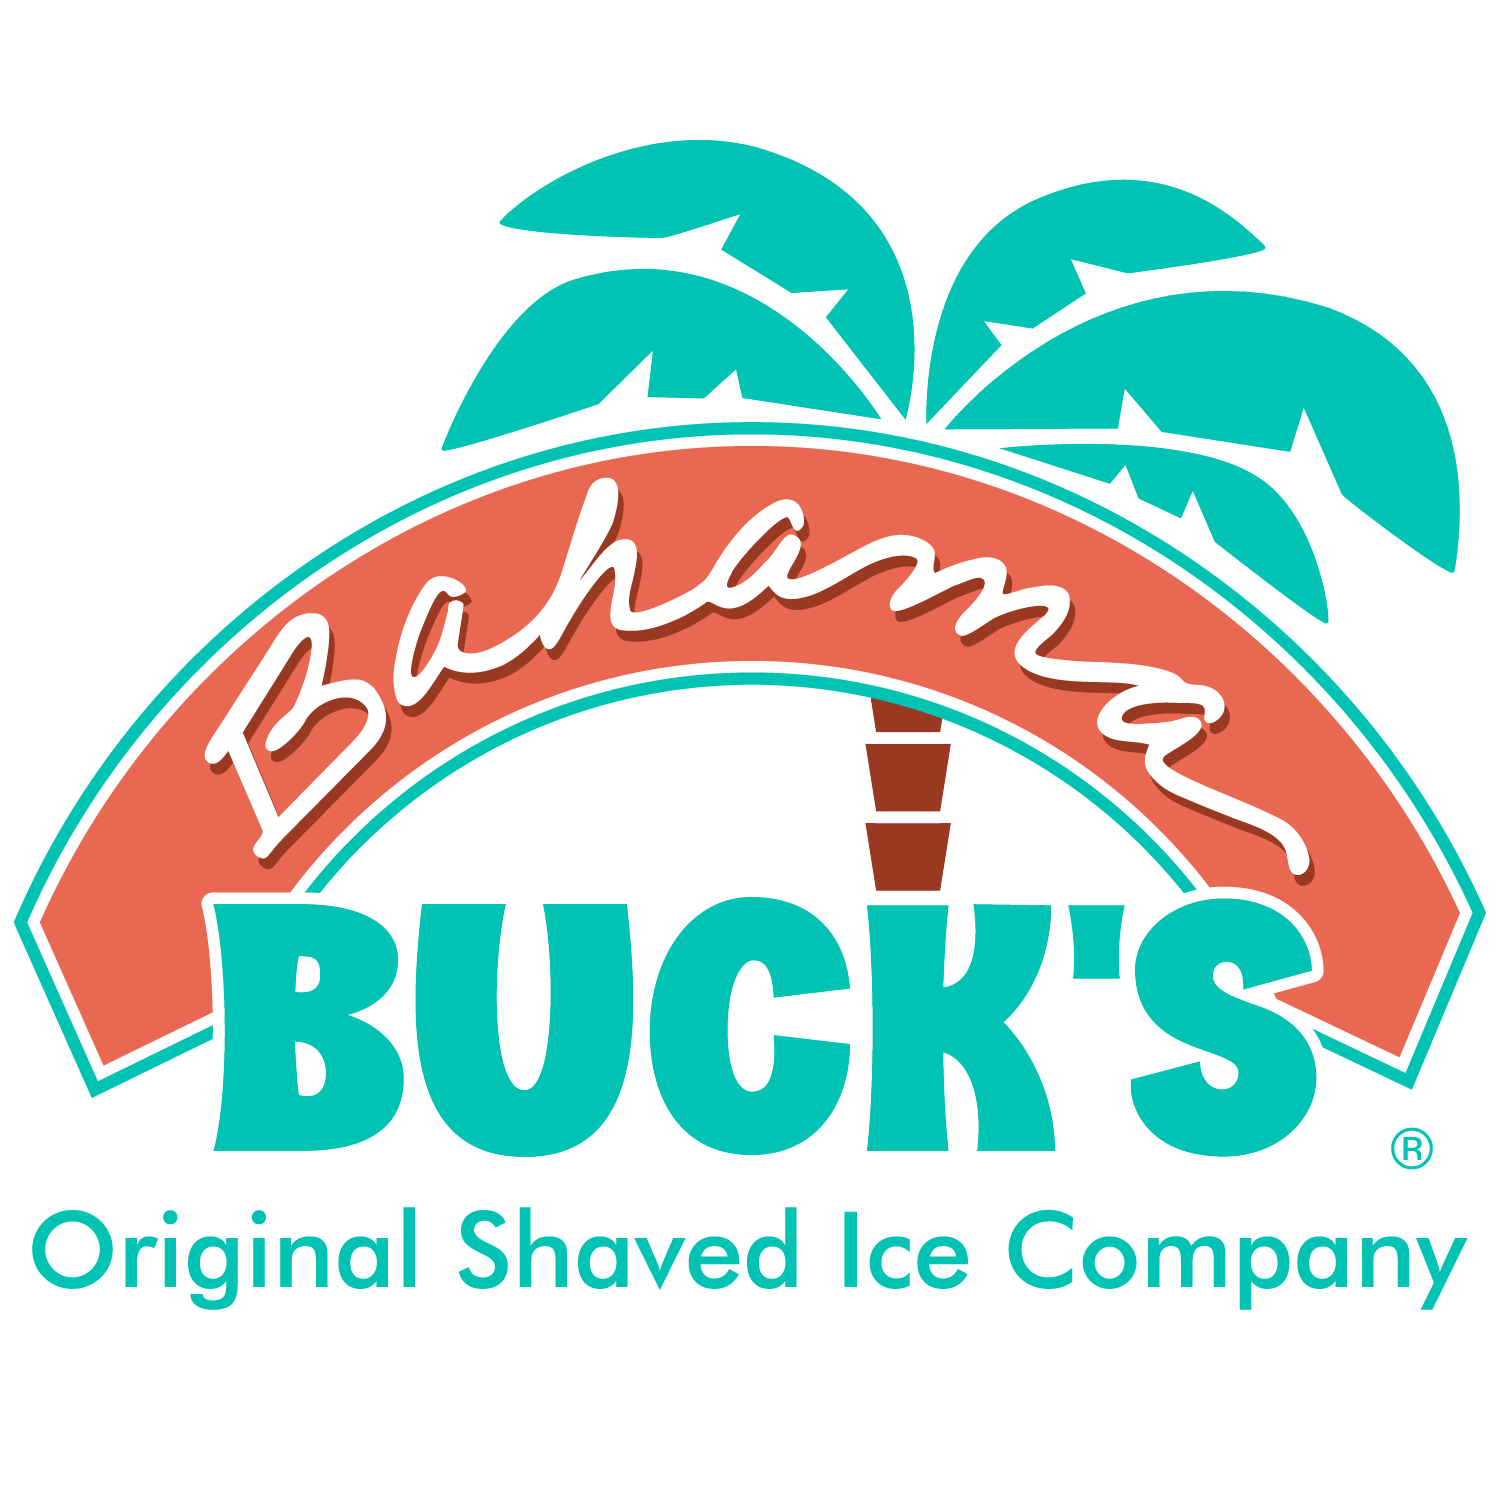 Image of Bahama Bucks Shaved Ice company logo